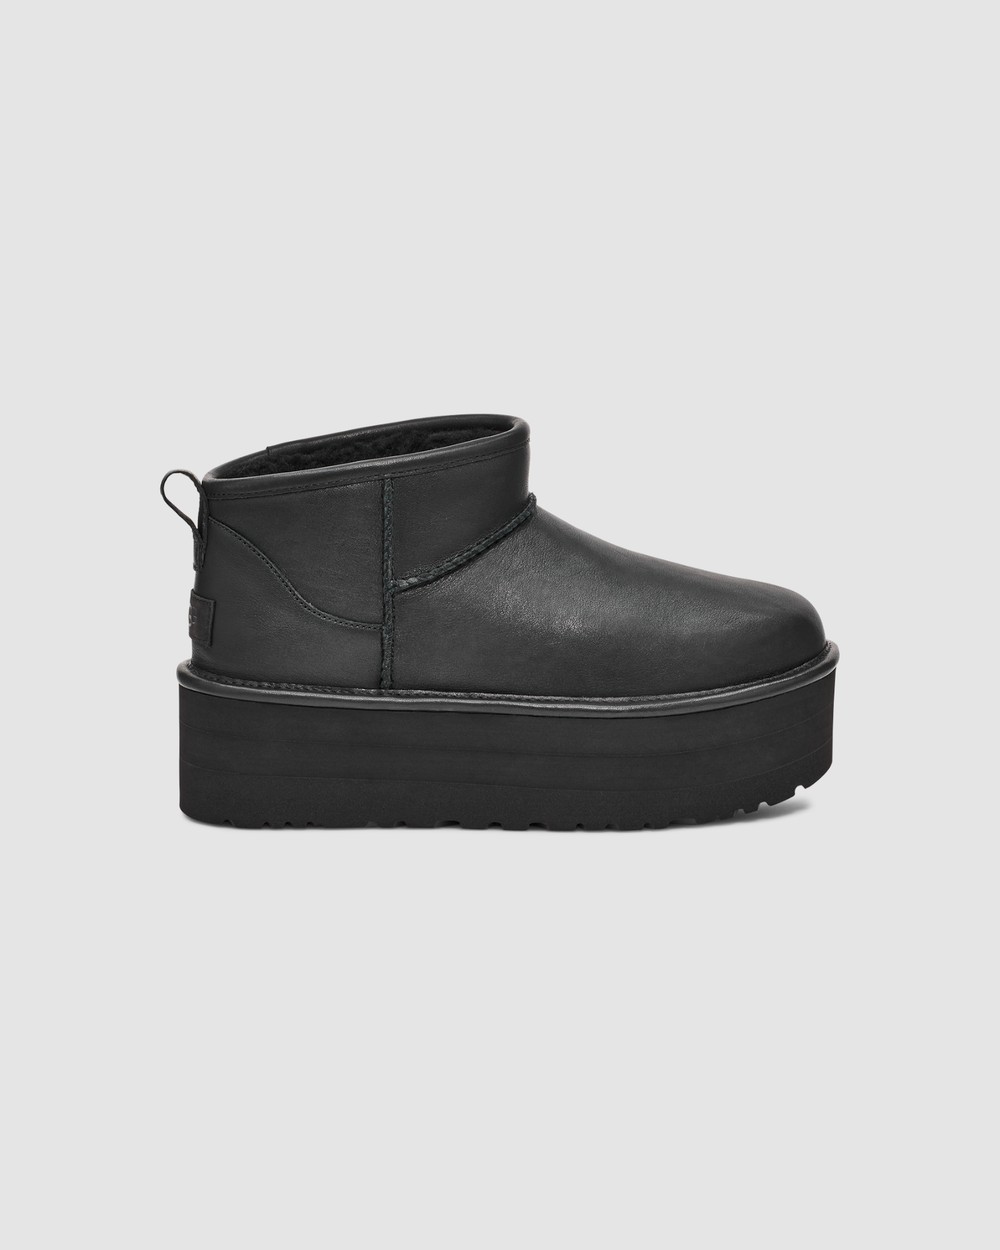 UGG classic mini leather boots